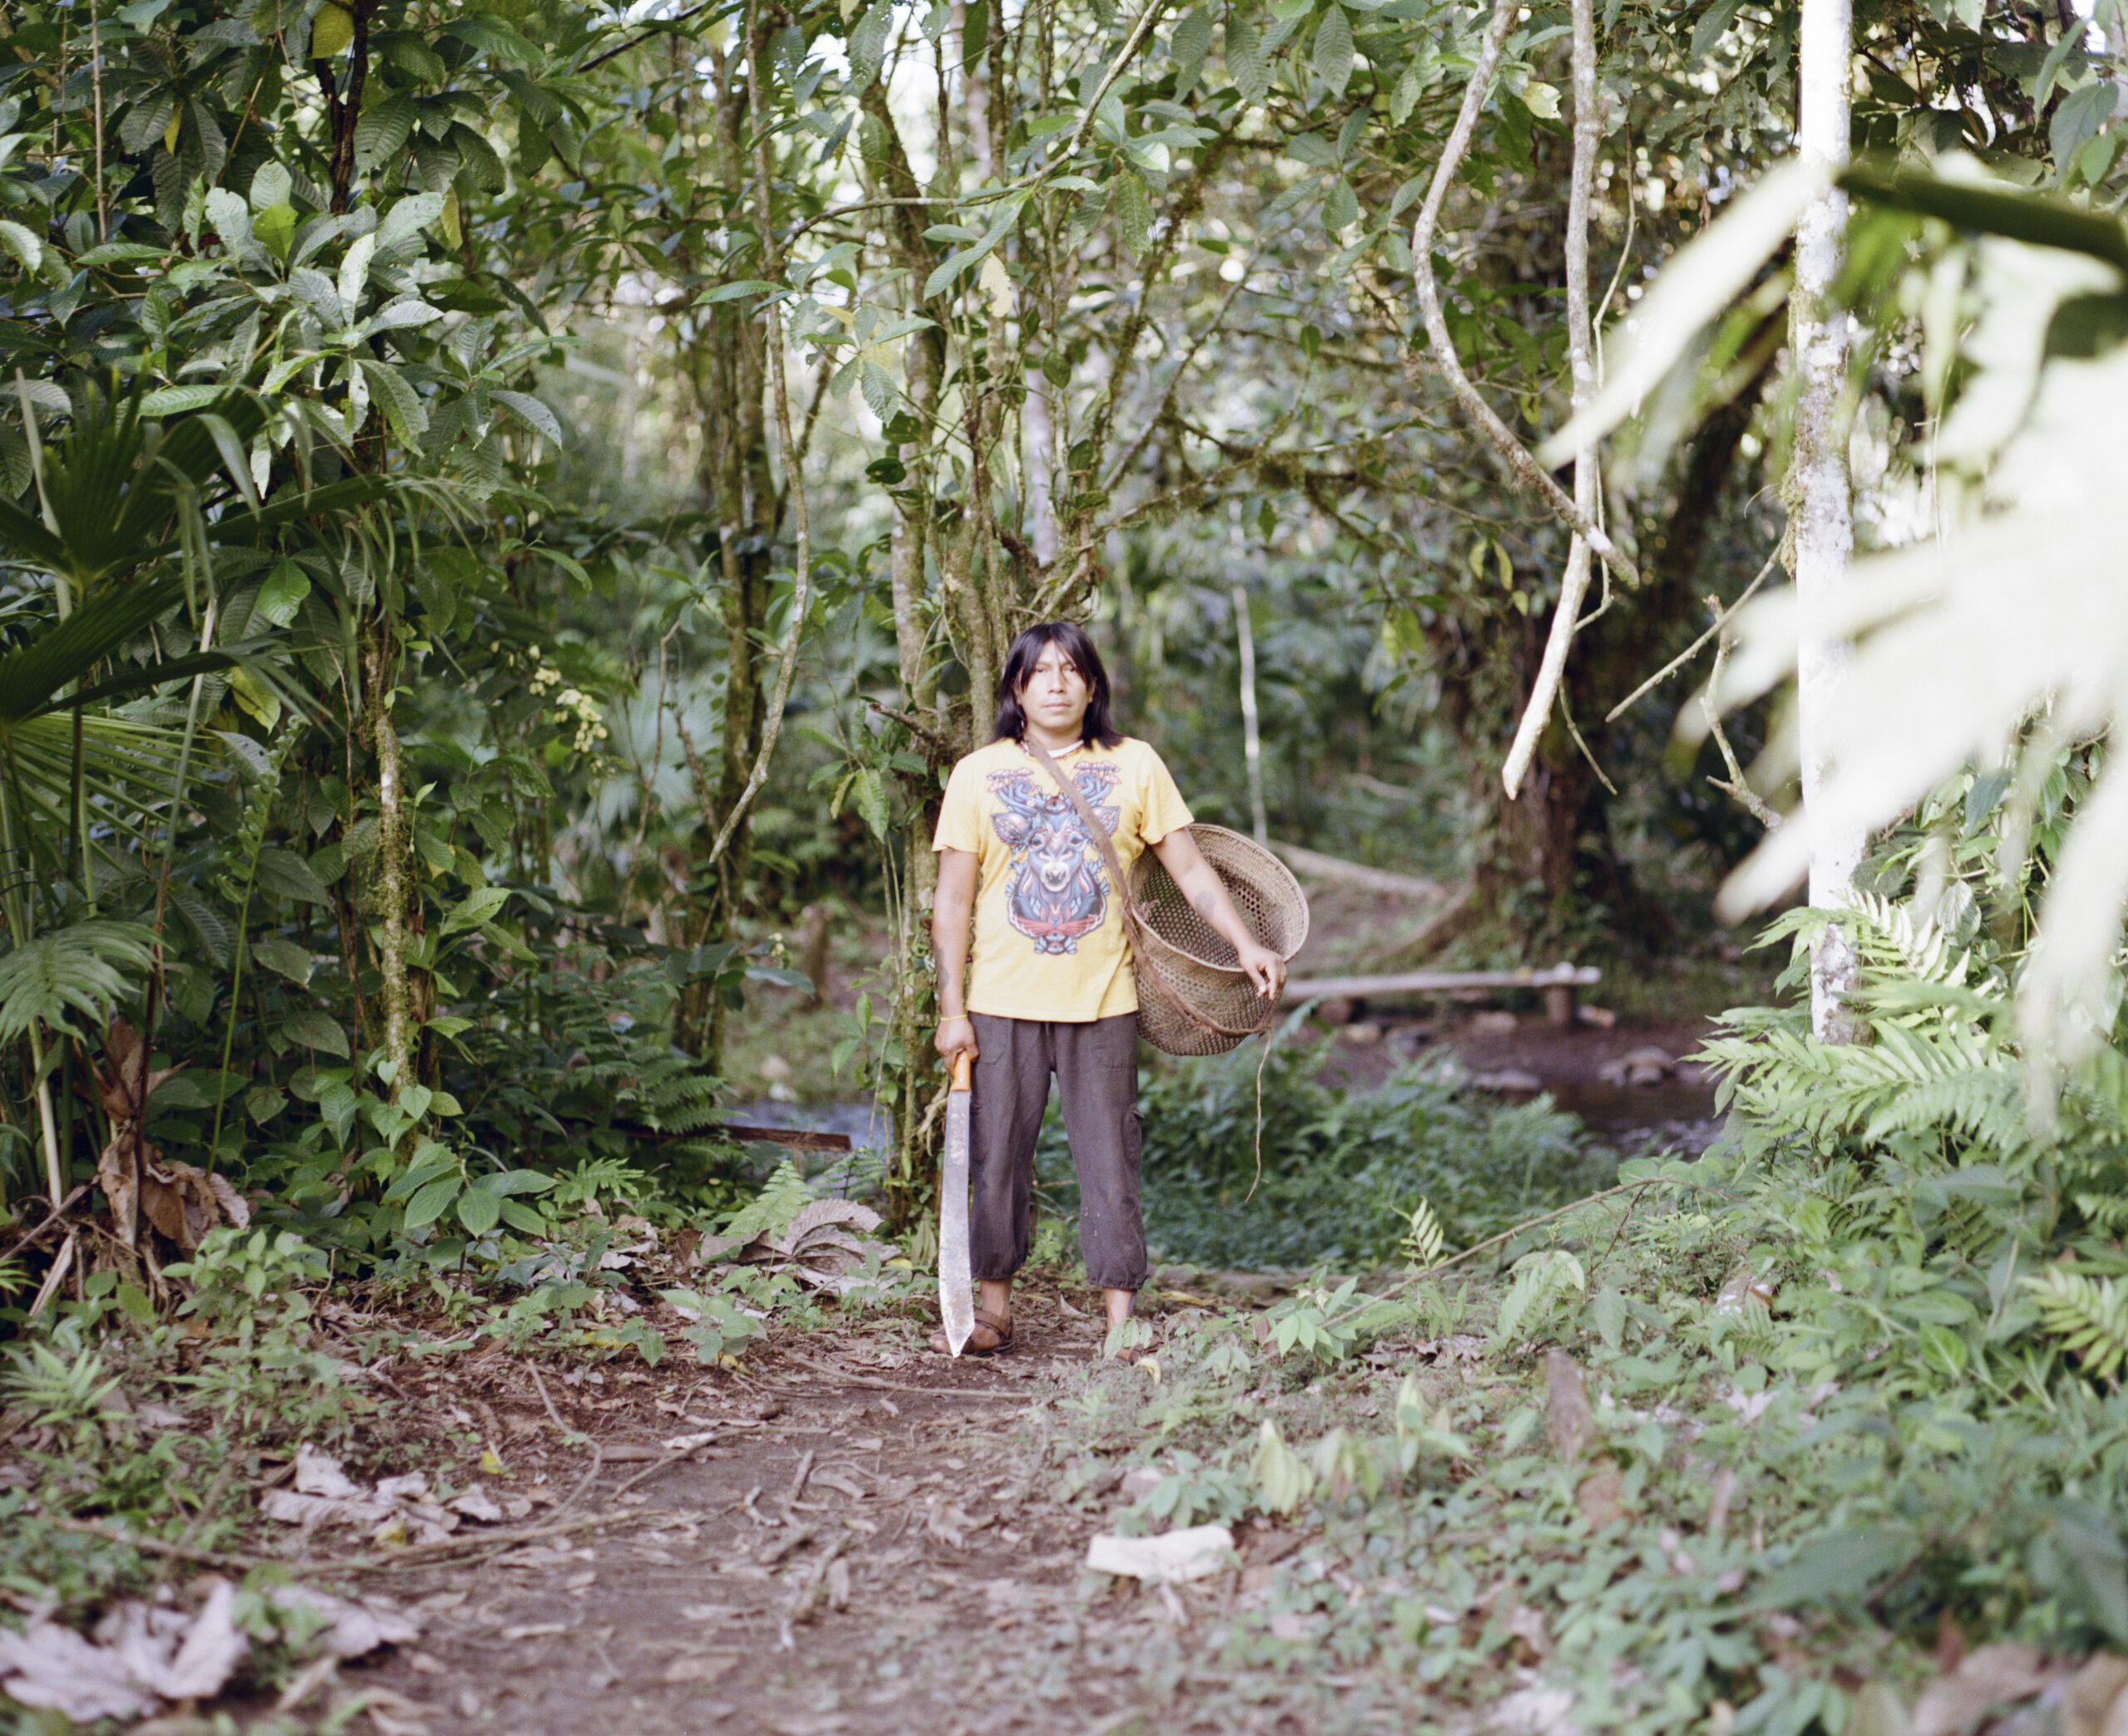 Yanda Montahuano Ushigua stands along a path, holding a basket and a machete, amongst the jungle at Itia Mamá Minga.